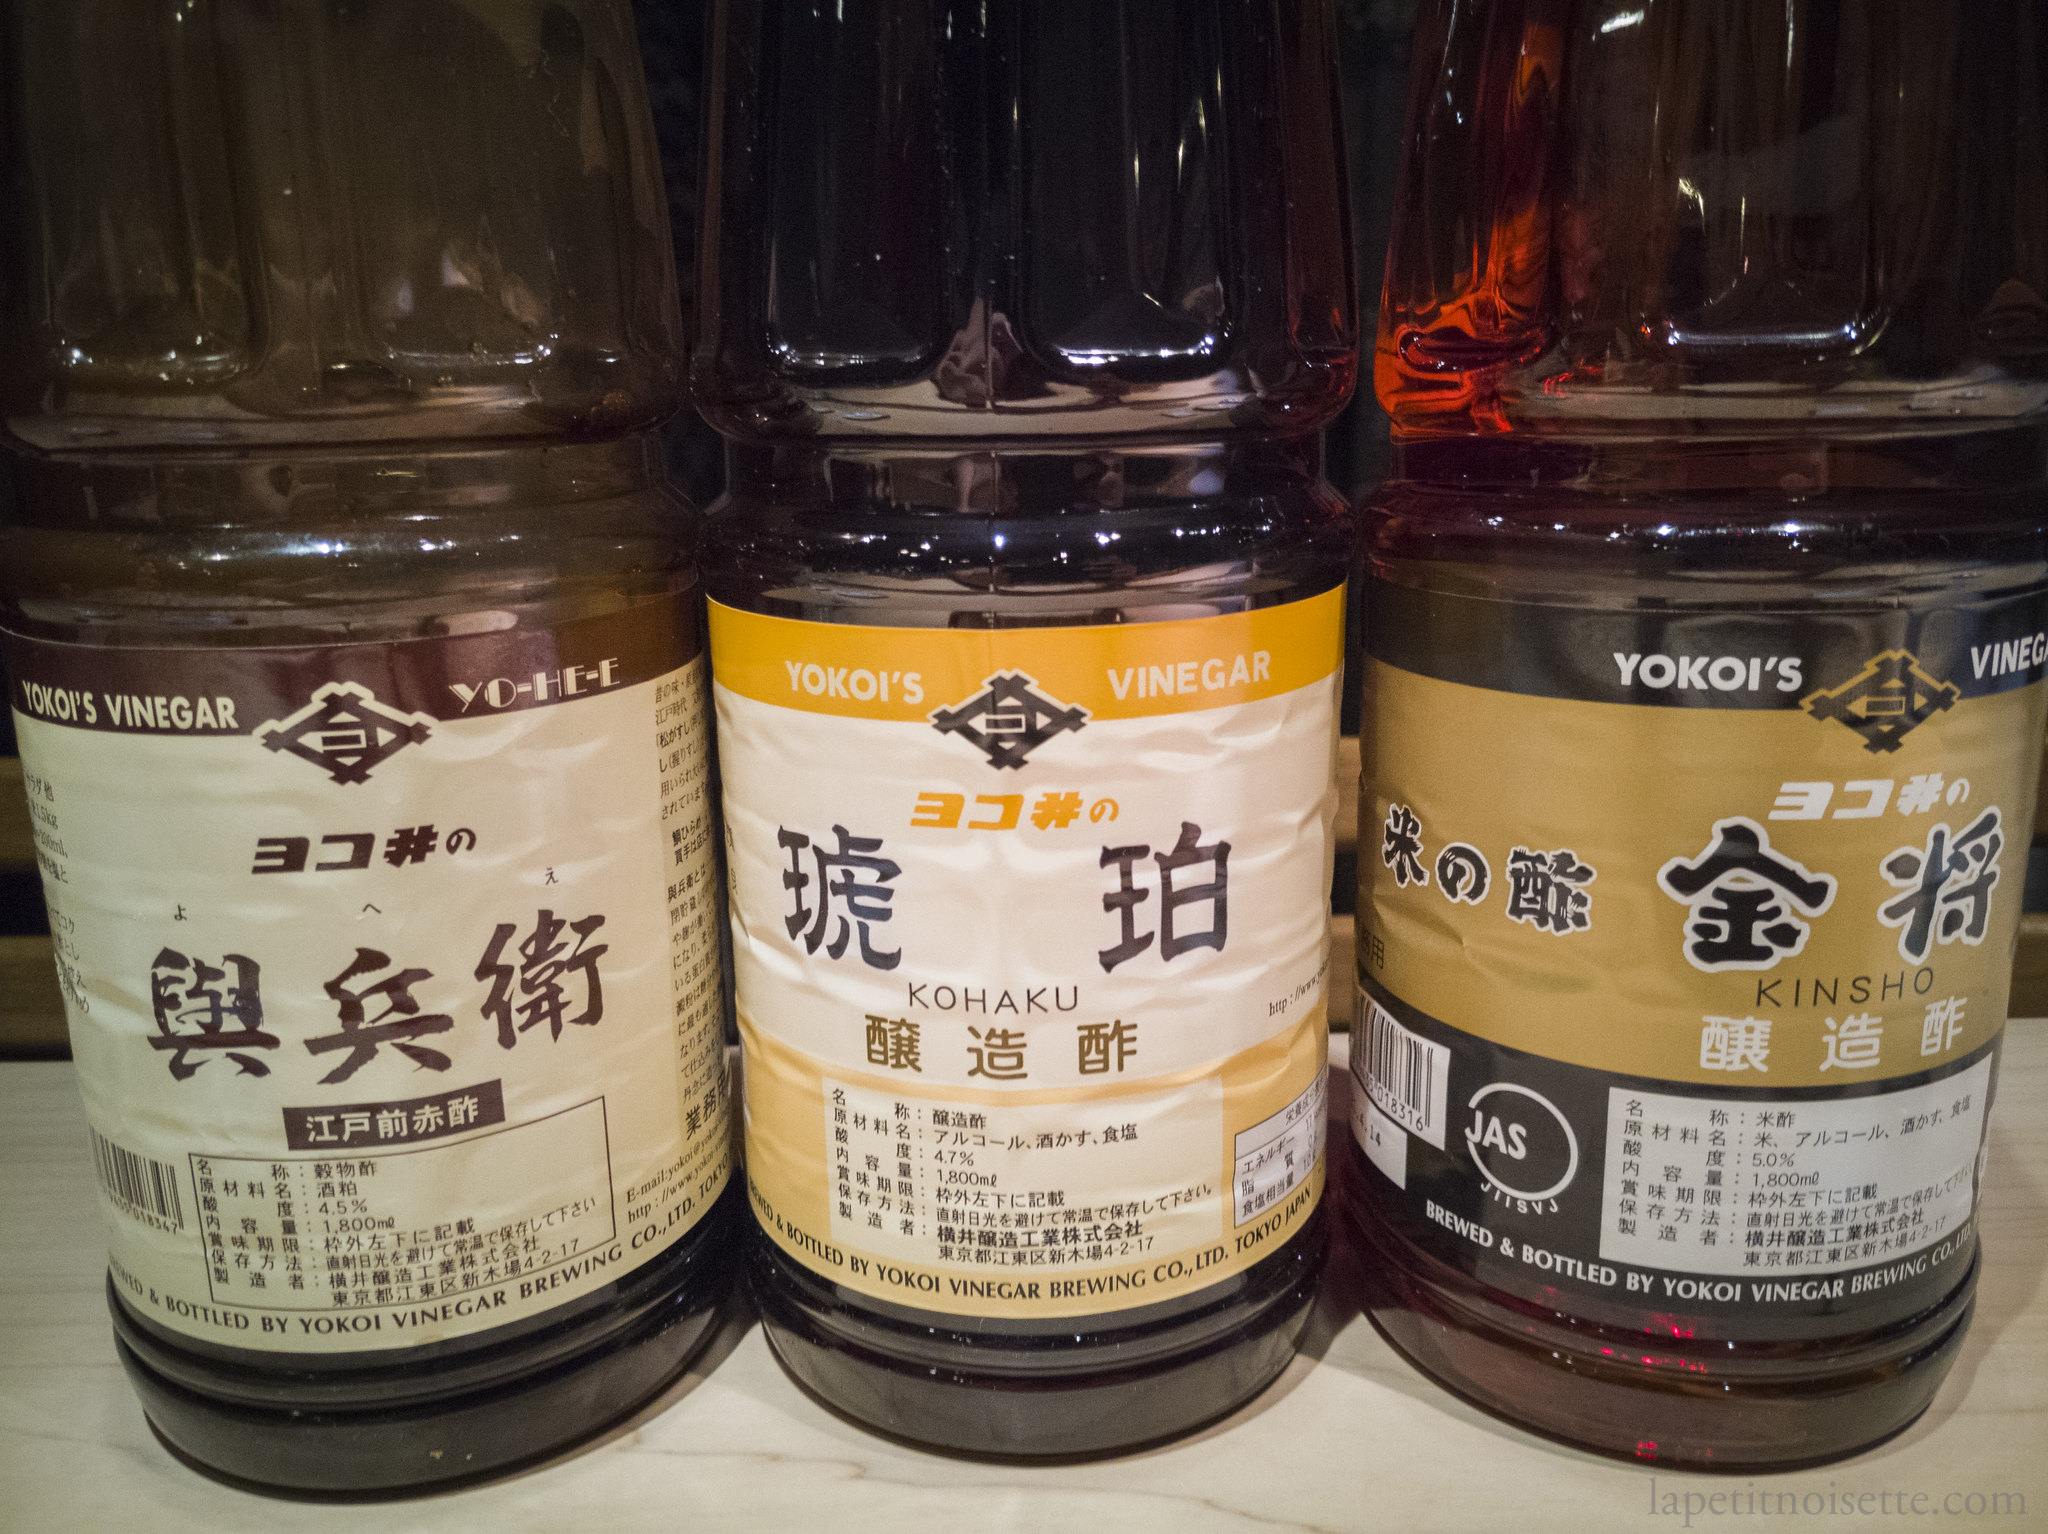 Yokoi's various grades of vinegars. From left to right: 與兵衛 赤酢 (よへえ/Yohee Akazu), 琥珀 赤酢（こはく/Kohaku Akazu), 金将 米の酢 (きんしょ/Kinsho)